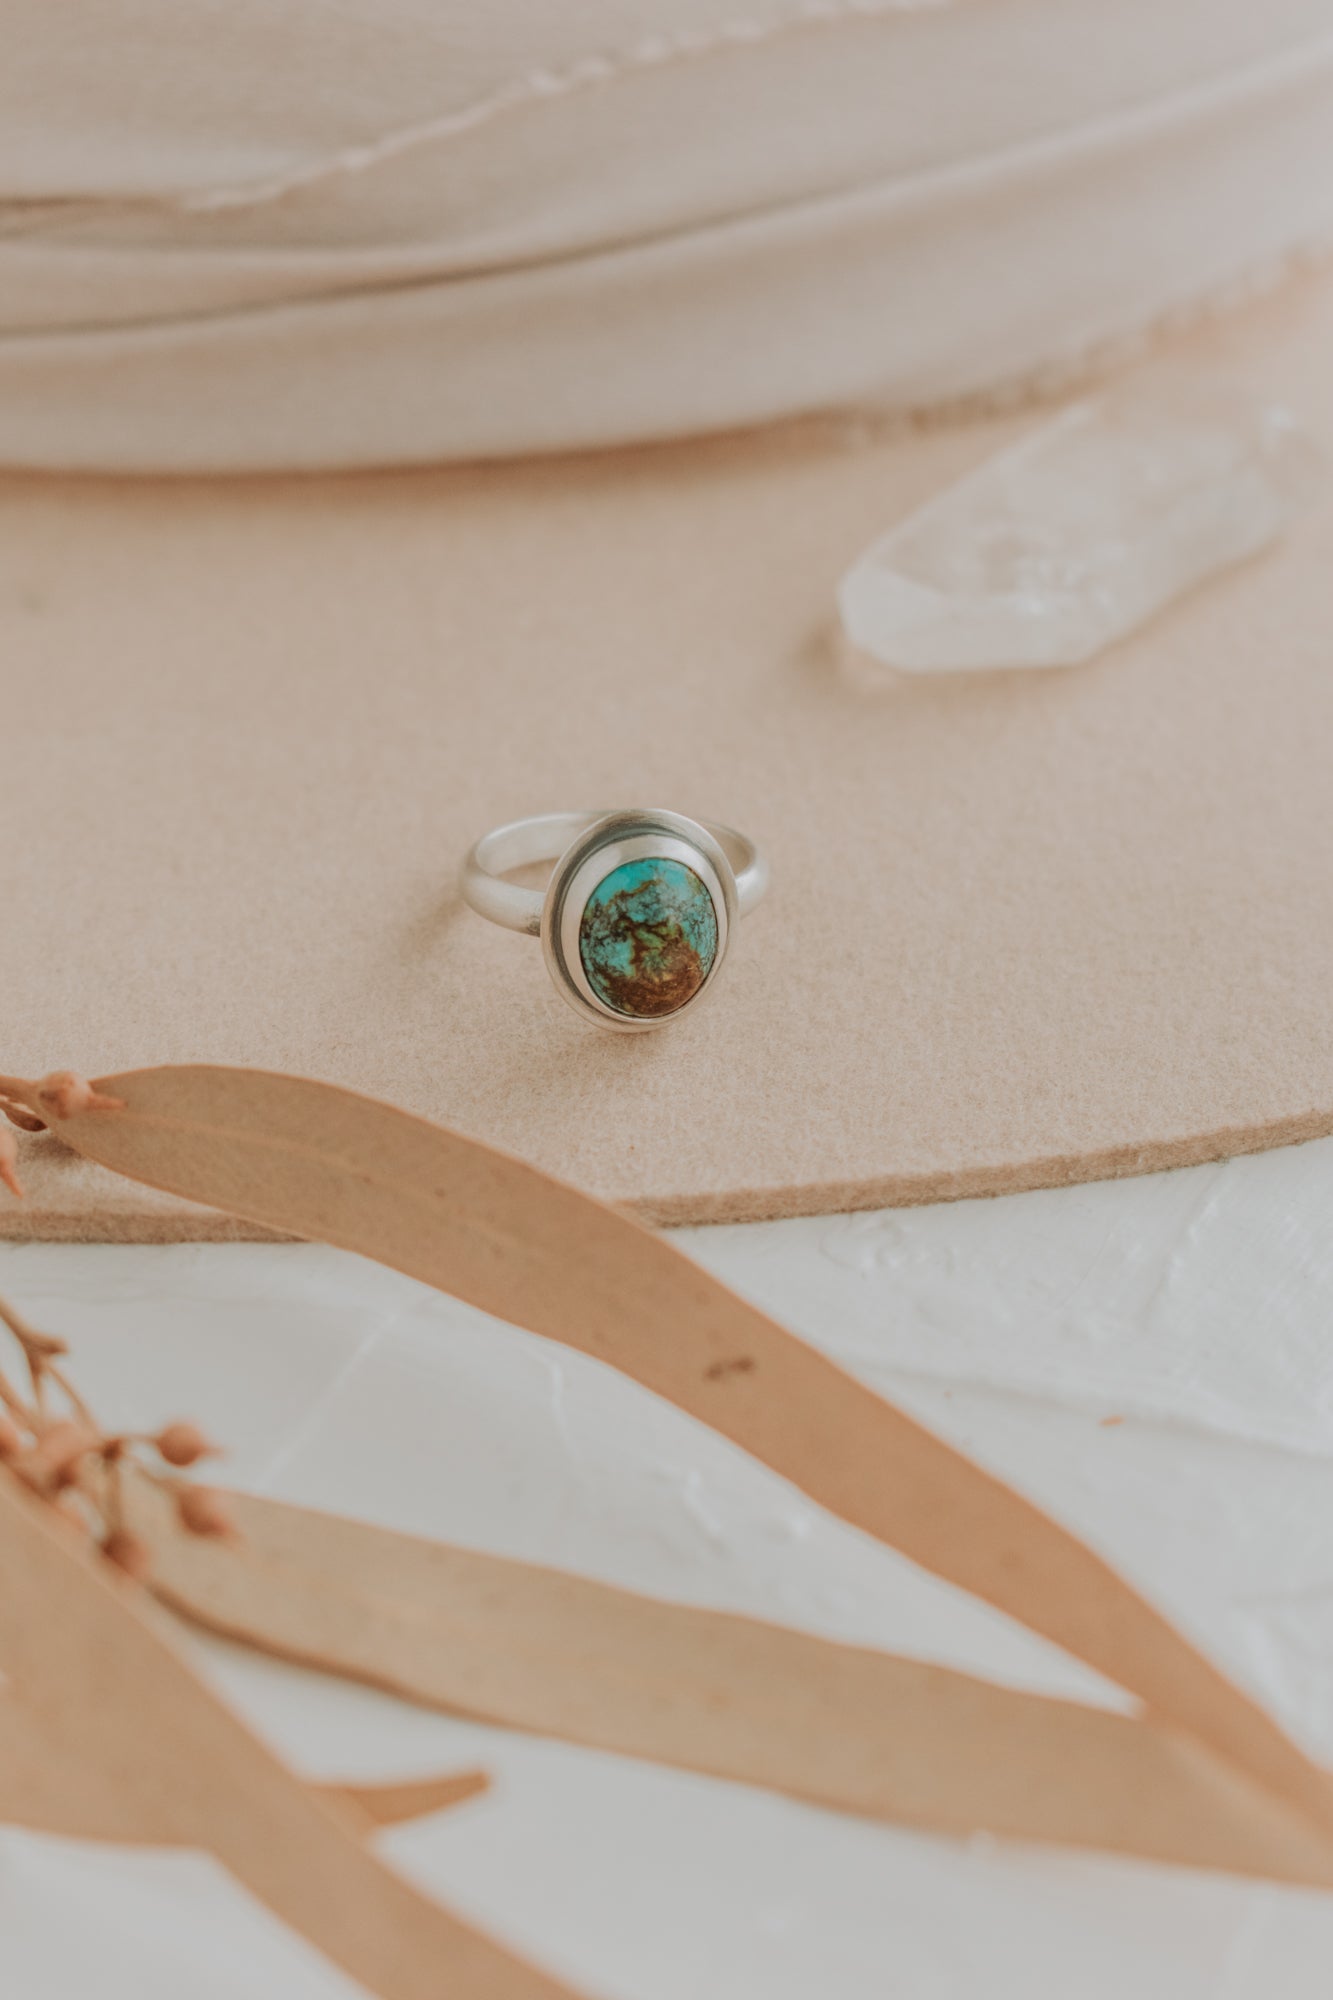 Turquoise Oval Ring - Size 7.75 - Third Hand Silversmith LLC handmade jewelry, Bozeman, Montana